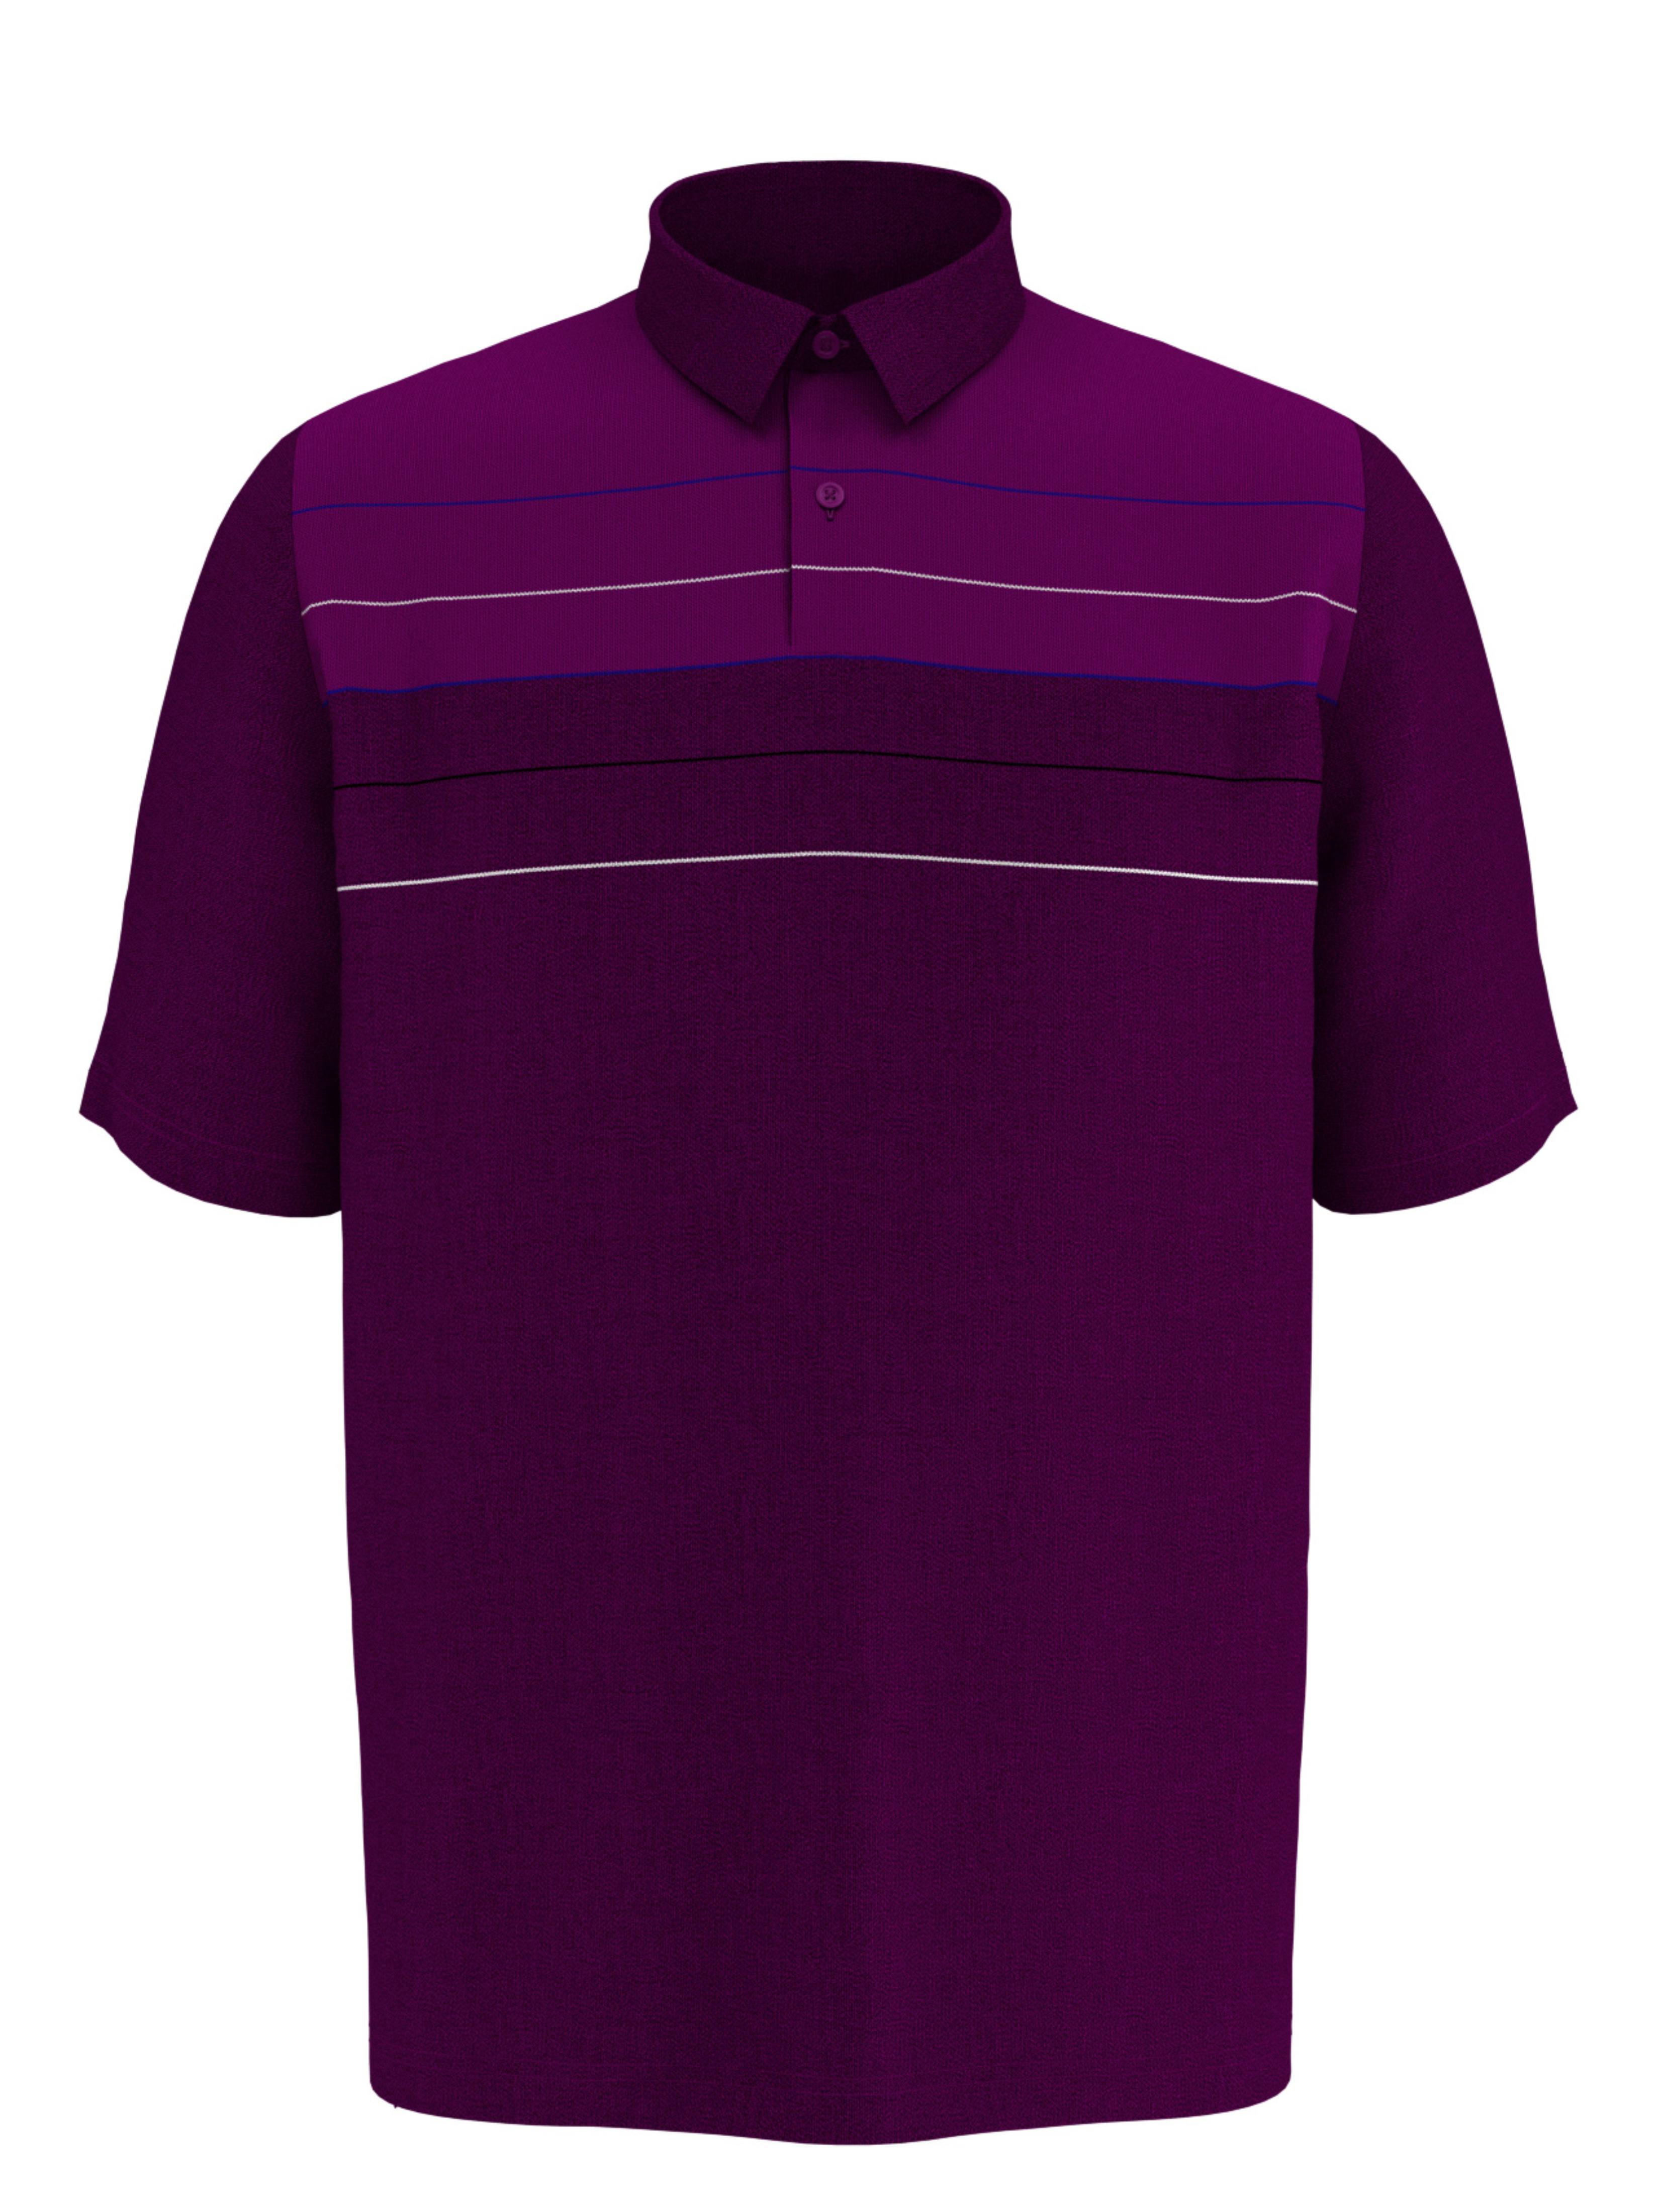 Callaway Apparel Mens Big & Tall Jaspe Color Block Golf Polo Shirt, Size 5XLT, Dark Purple, Polyester/Recycled Polyester/Elastane | Golf Apparel Shop